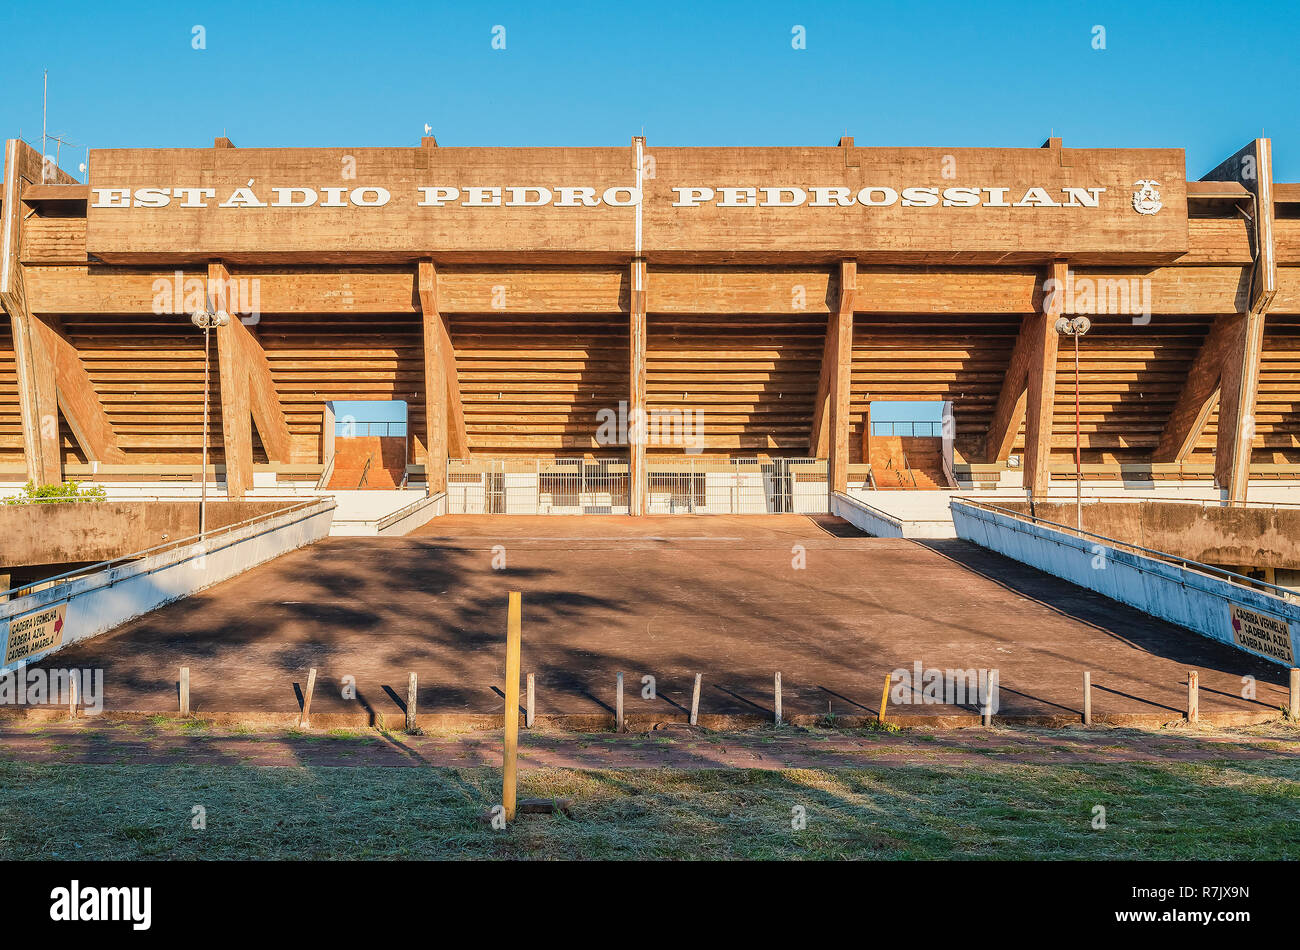 Campo Grande - MS, Brazil - December 08, 2018: Photo of the entrance of the Estadio Pedro Pedrossian stadium. Estadio Morenao at a beautiful sunny day Stock Photo